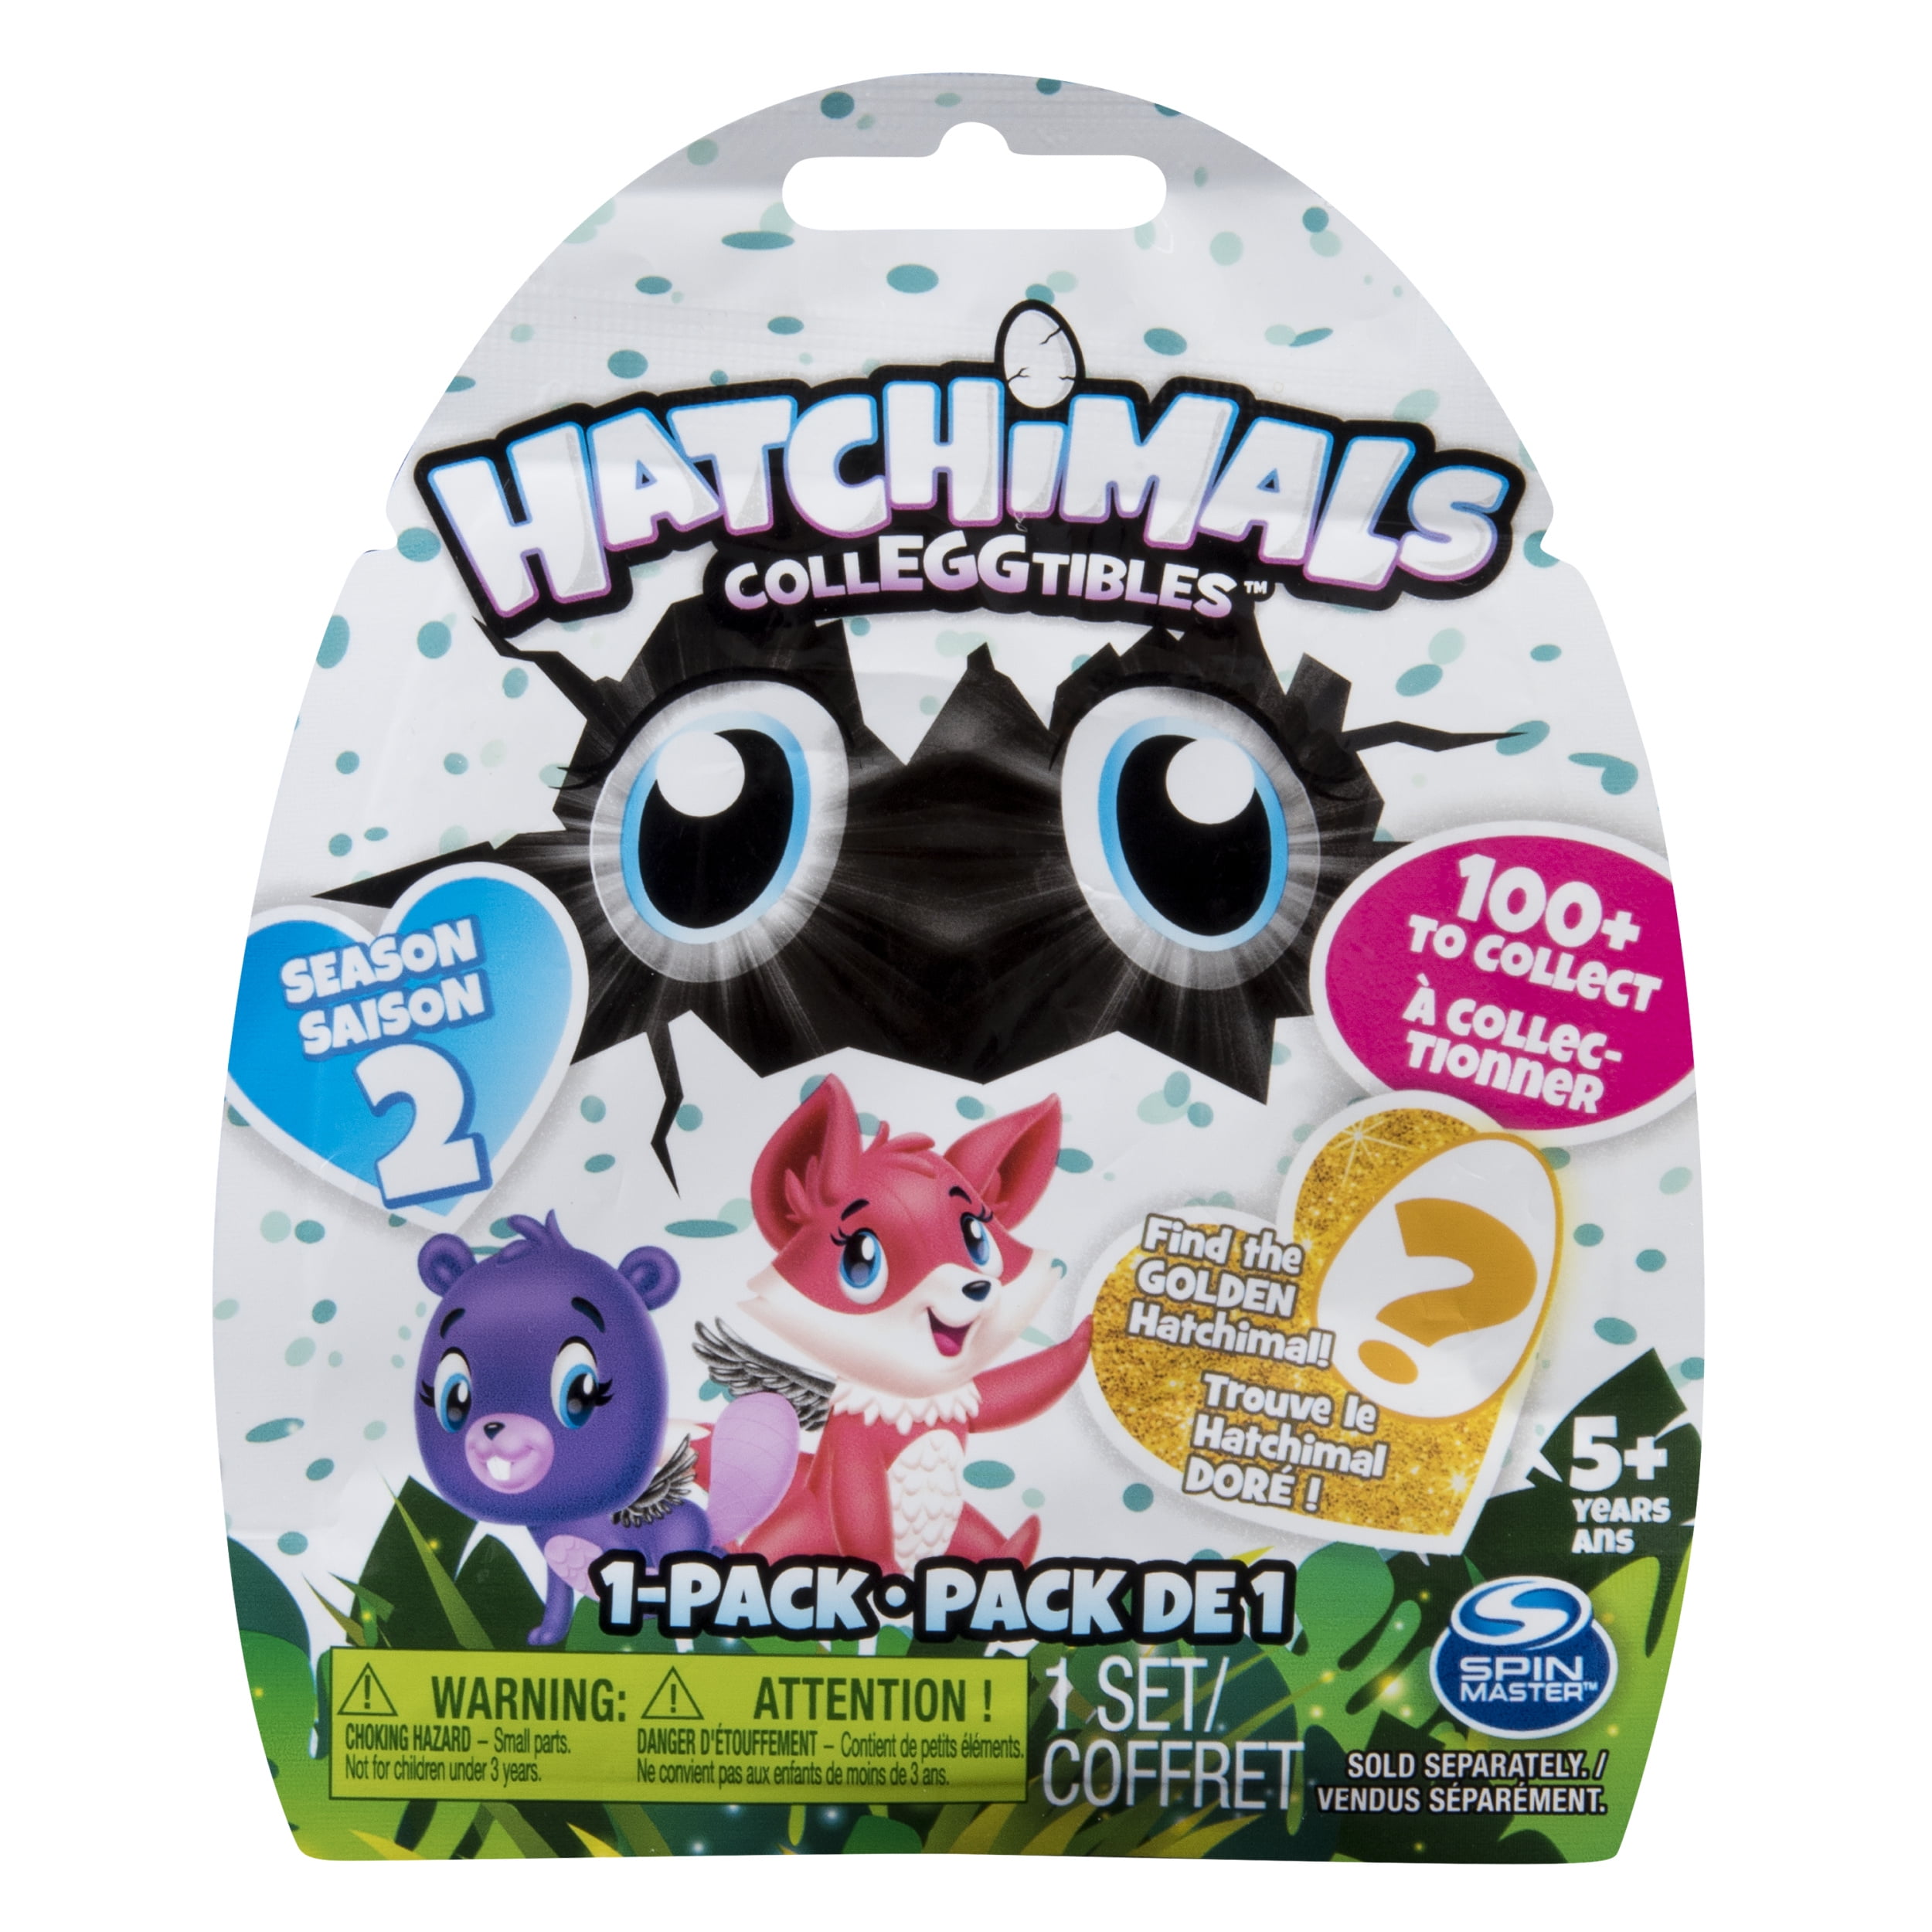 Hatchimals Colleggtibles Surprise Egg 2 Pack Plus Nest Season 2 Find the Golden 